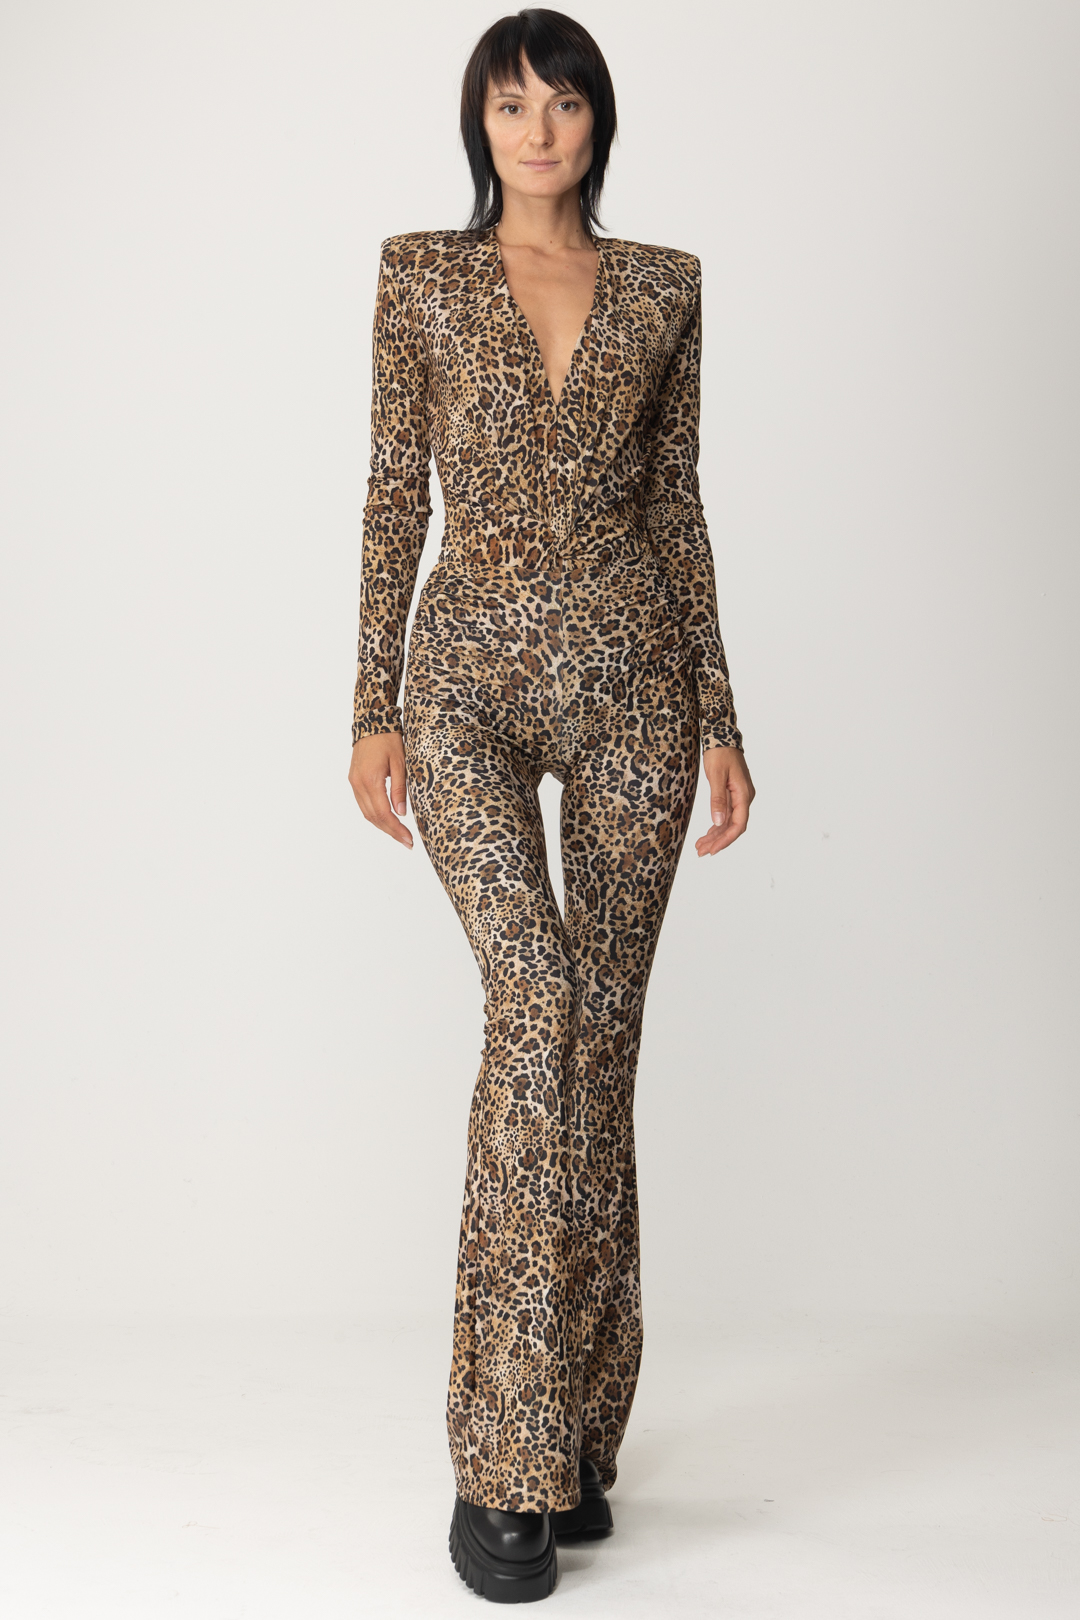 Preview: Aniye By Leopard print bodysuit Kate LEO